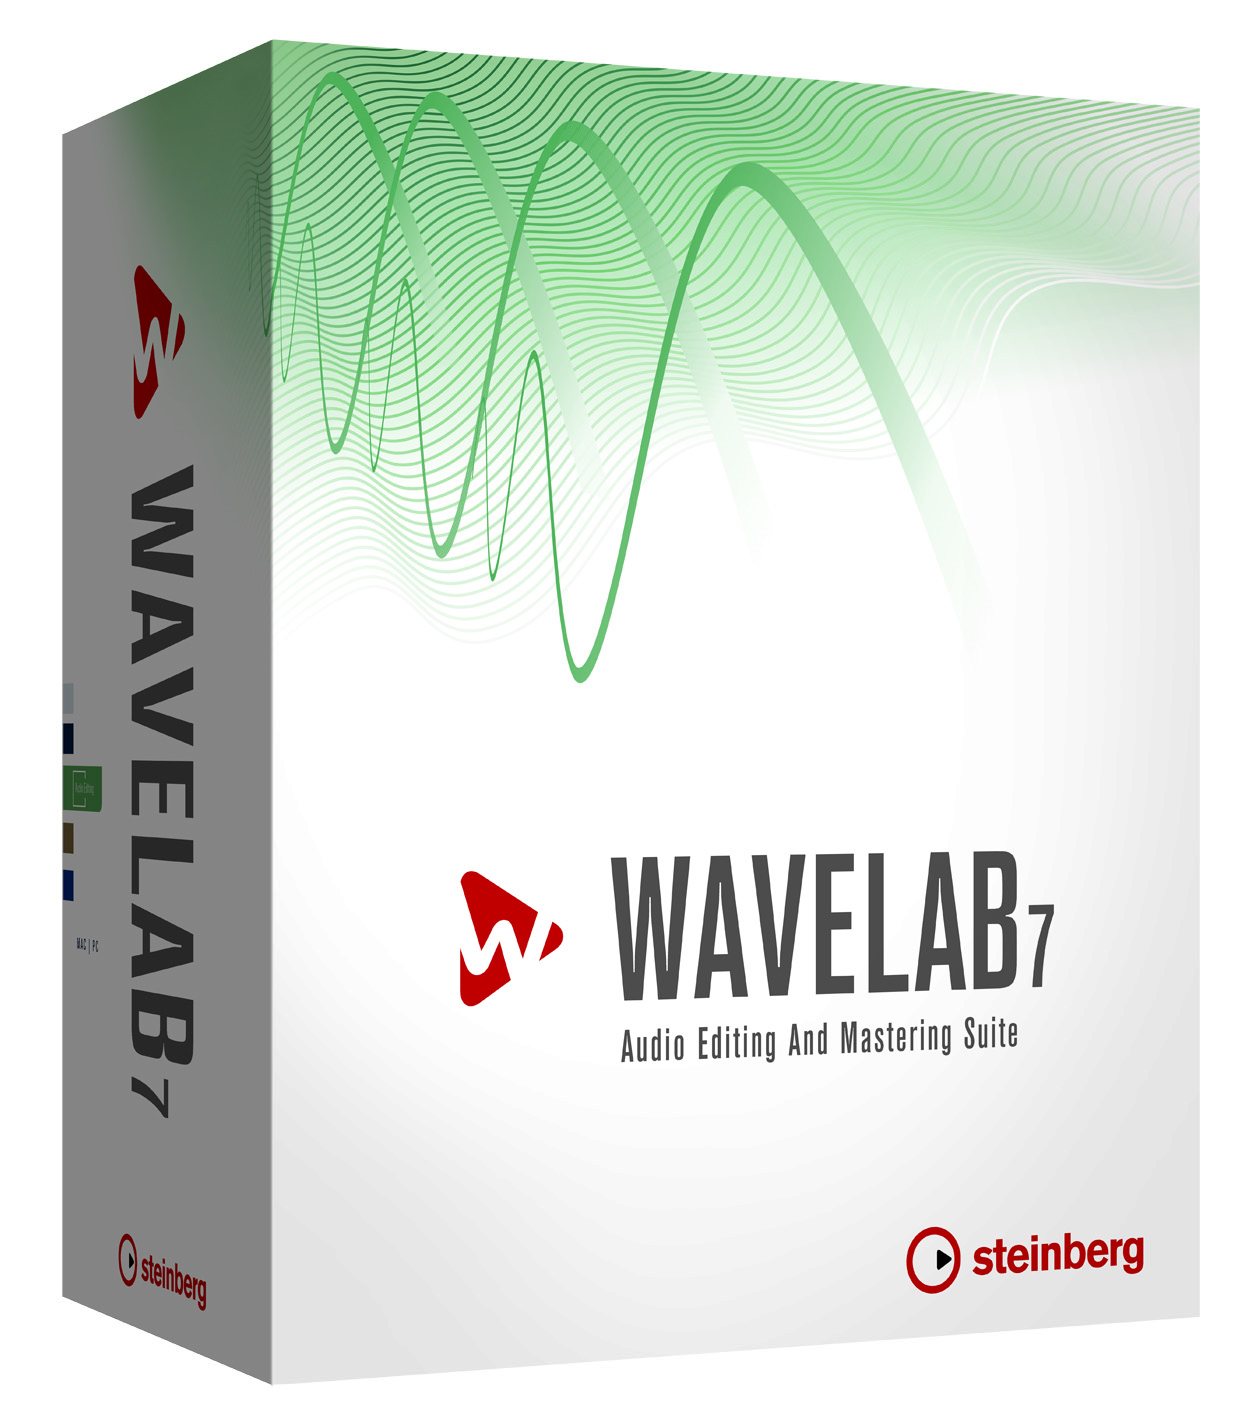 wavelab 7 download